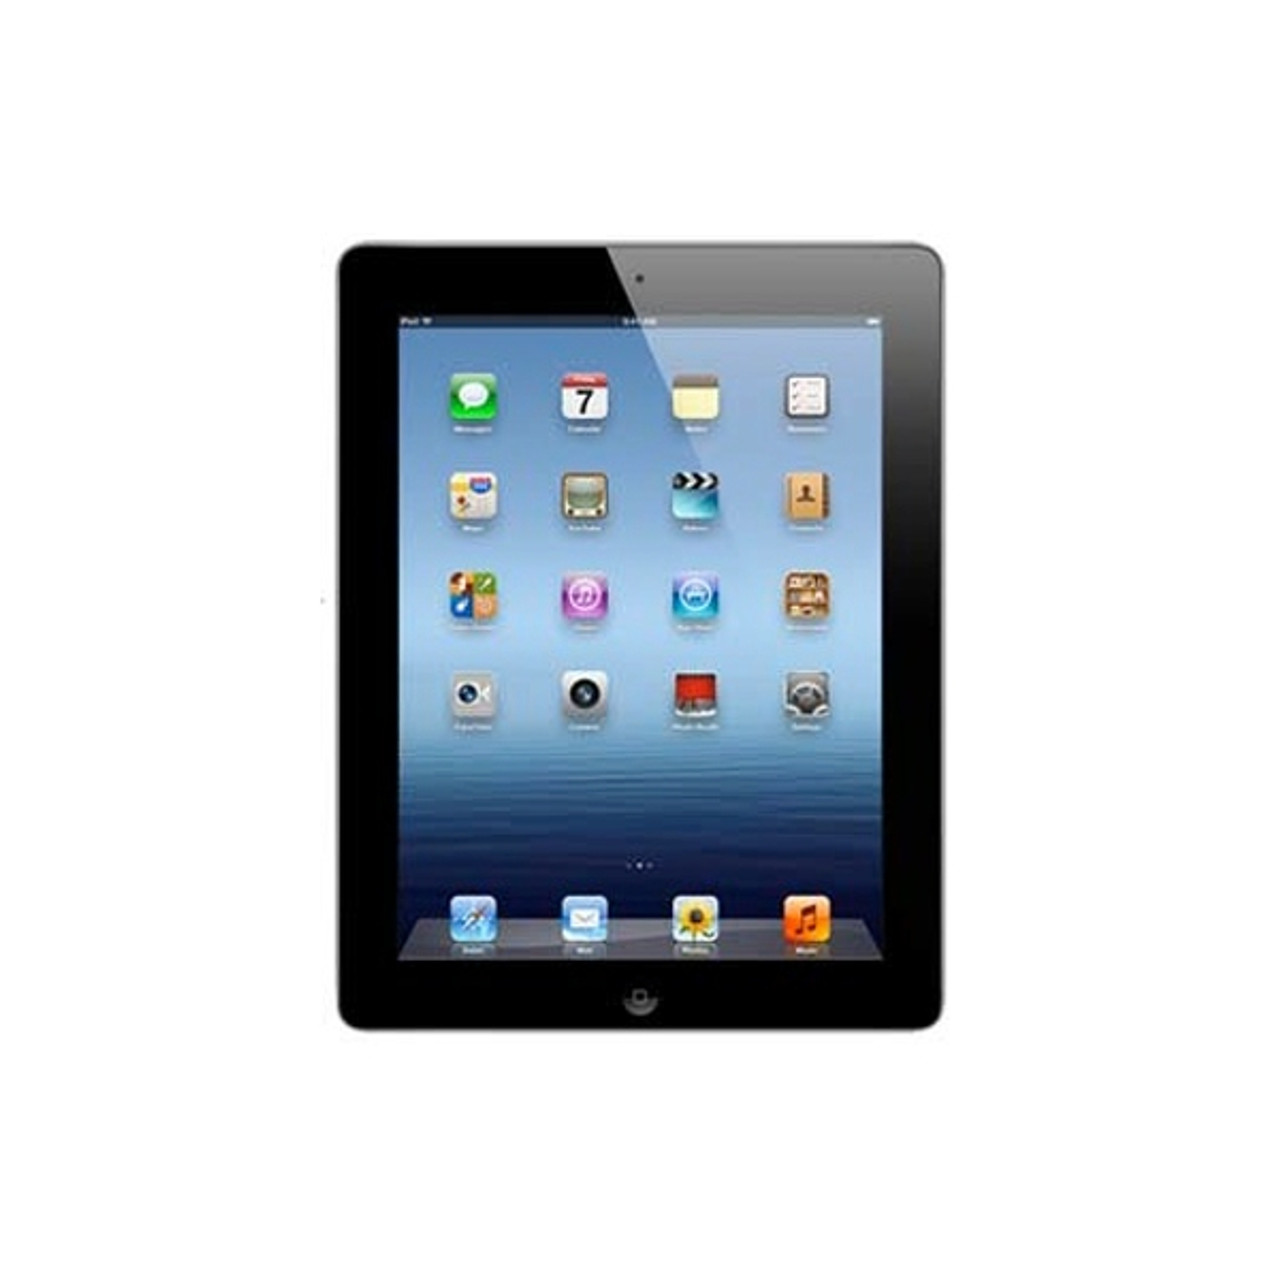 Vintage: Fair Condition*: Apple iPad 4 Retina 16GB - Black MD510LL/A